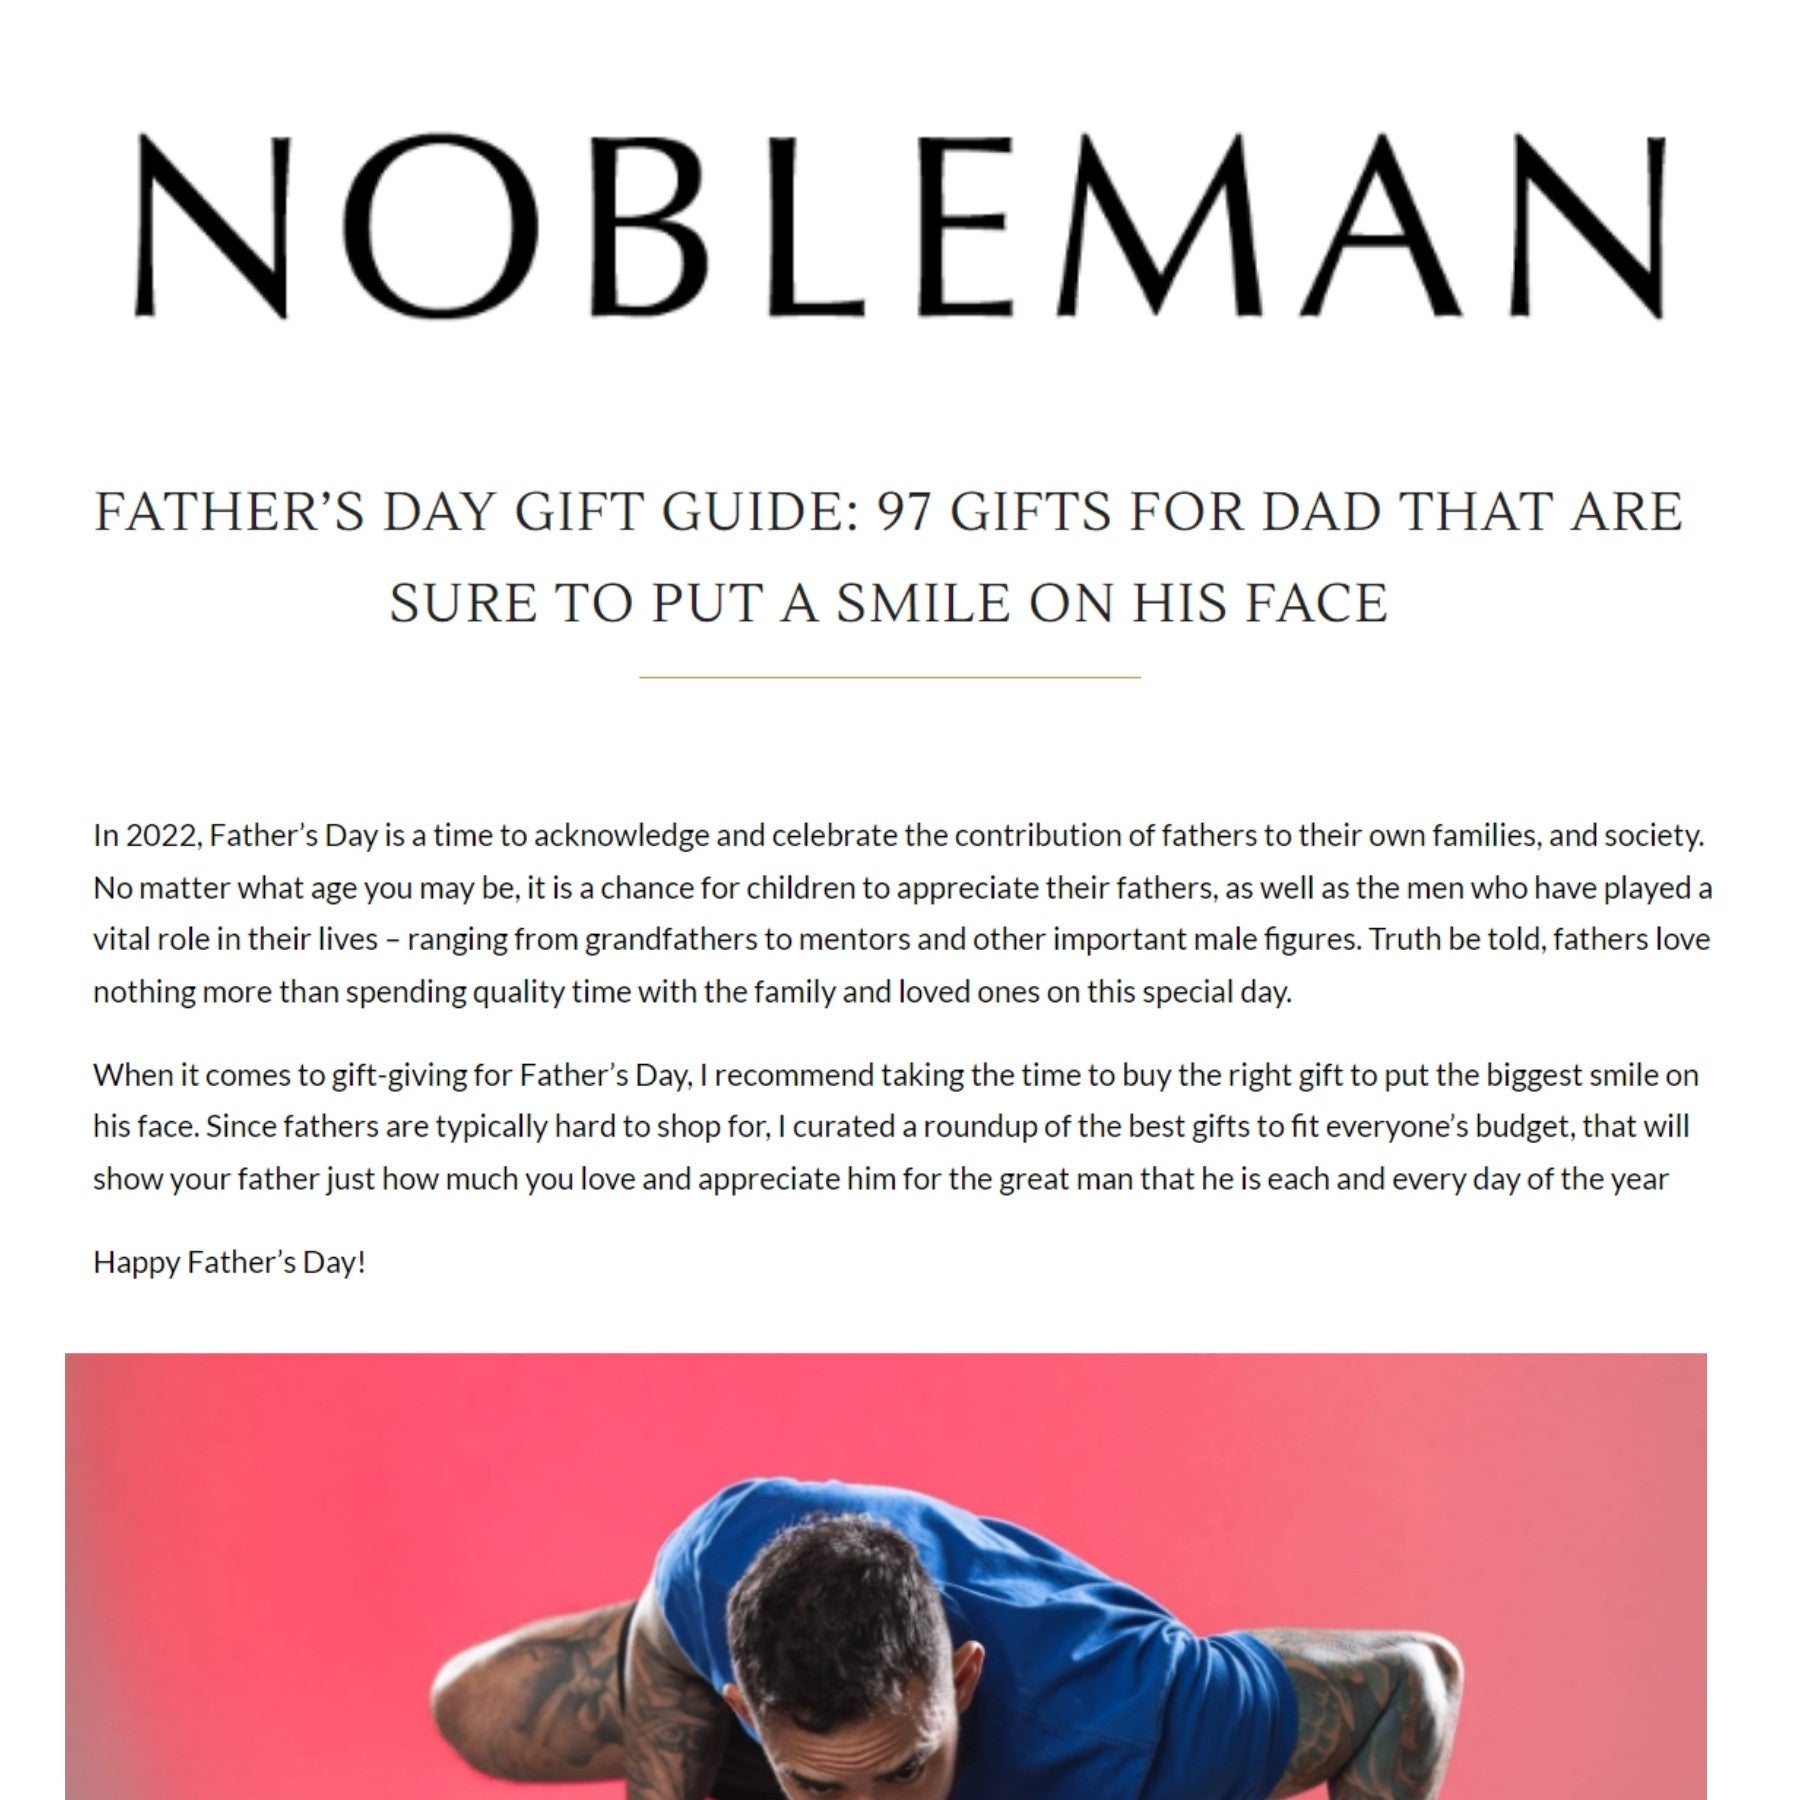 Nobleman features Core-Tex